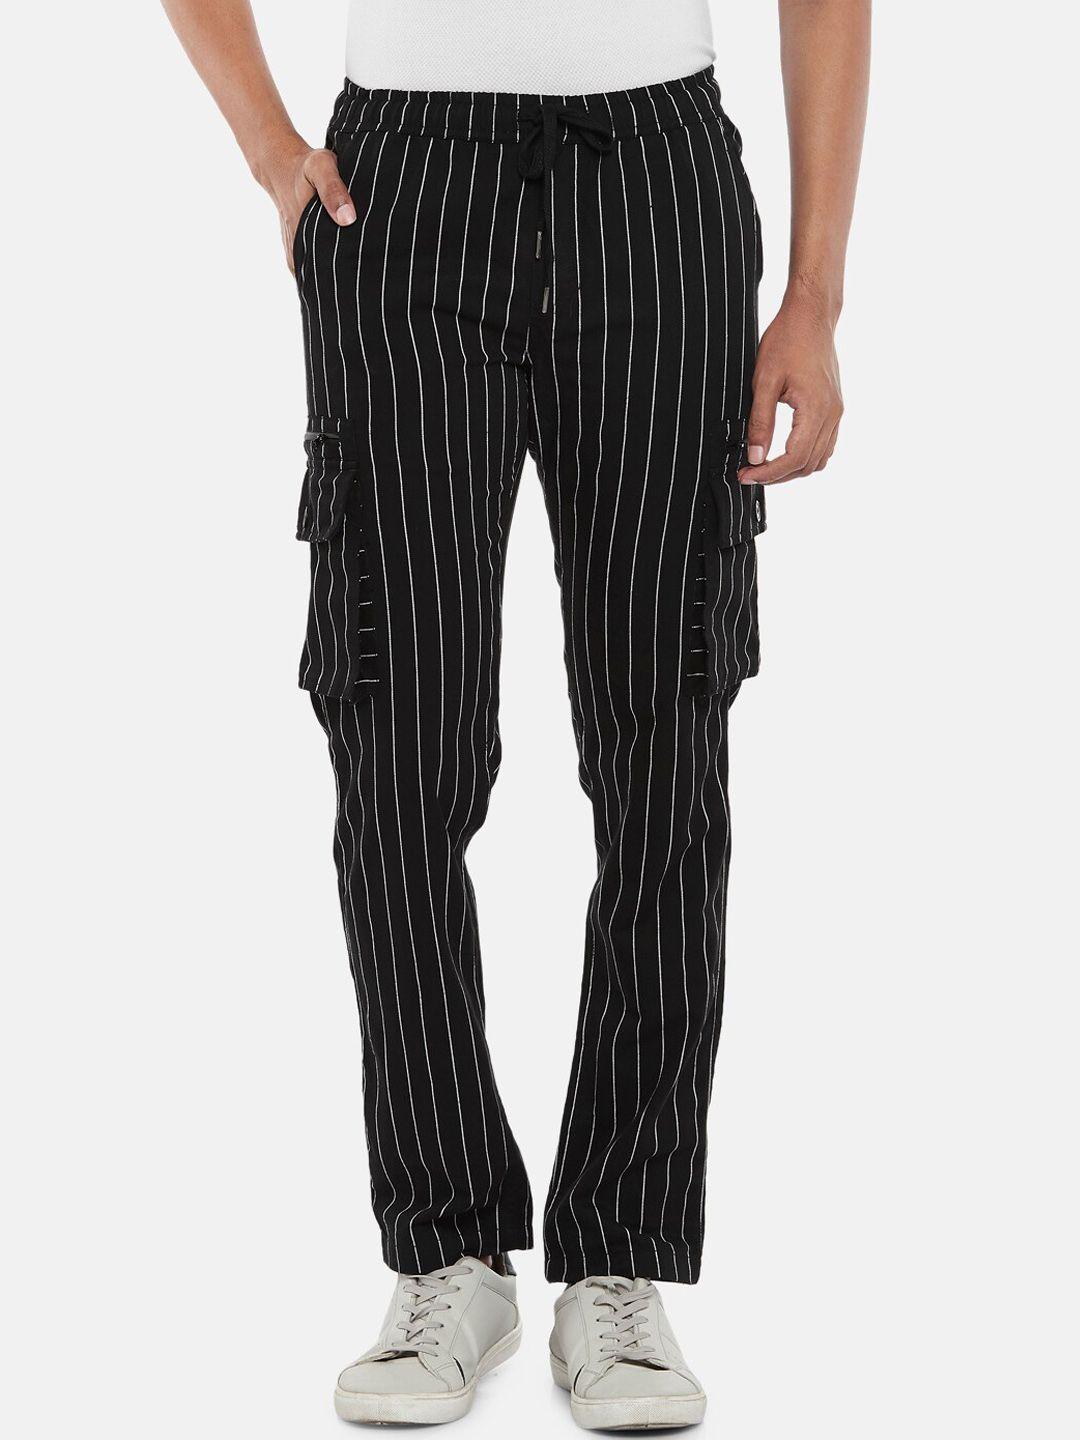 urban-ranger-by-pantaloons-men-black-&-white-striped-slim-fit-cotton-cargos-trousers